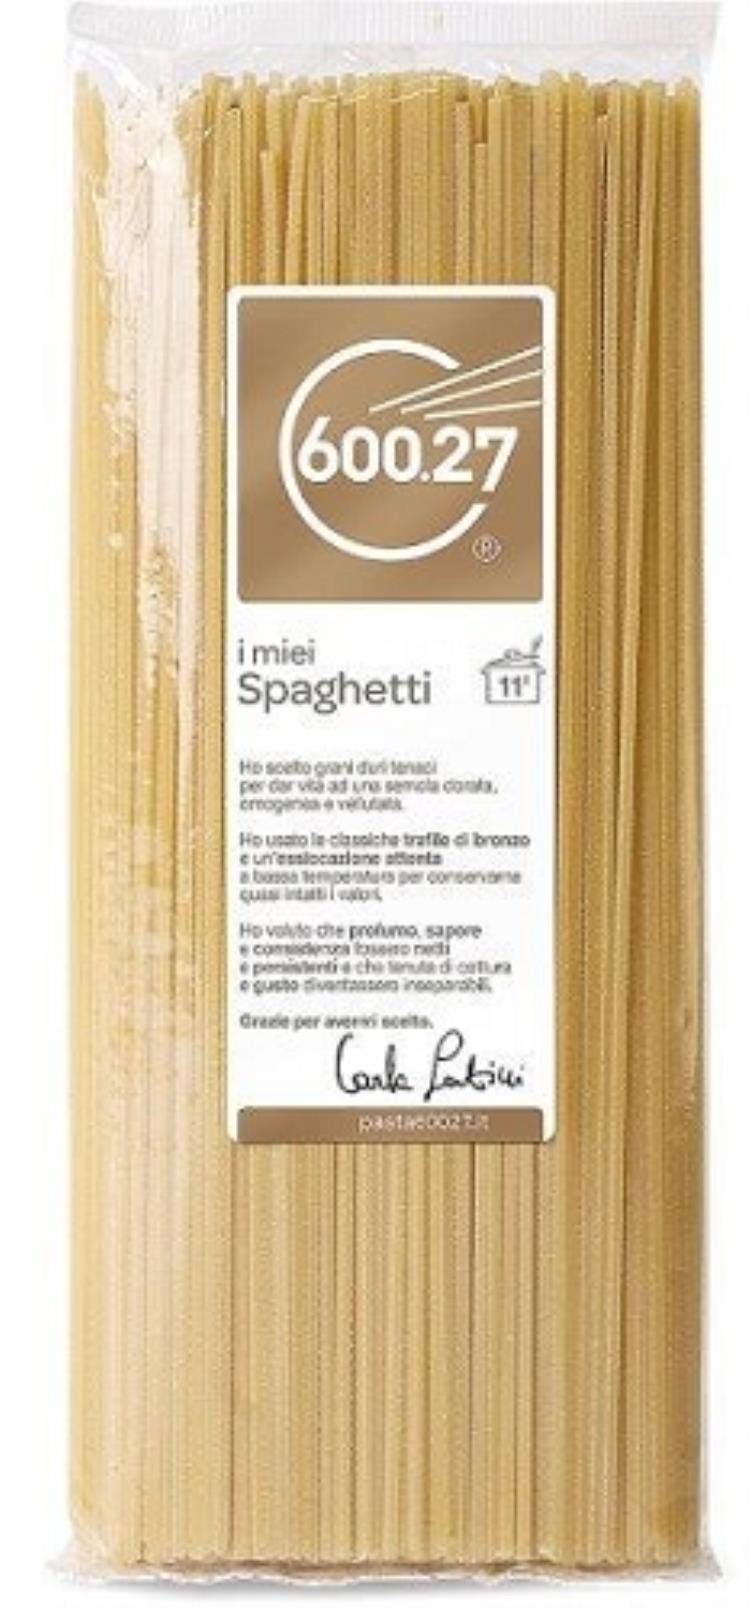 02 Spaghetti